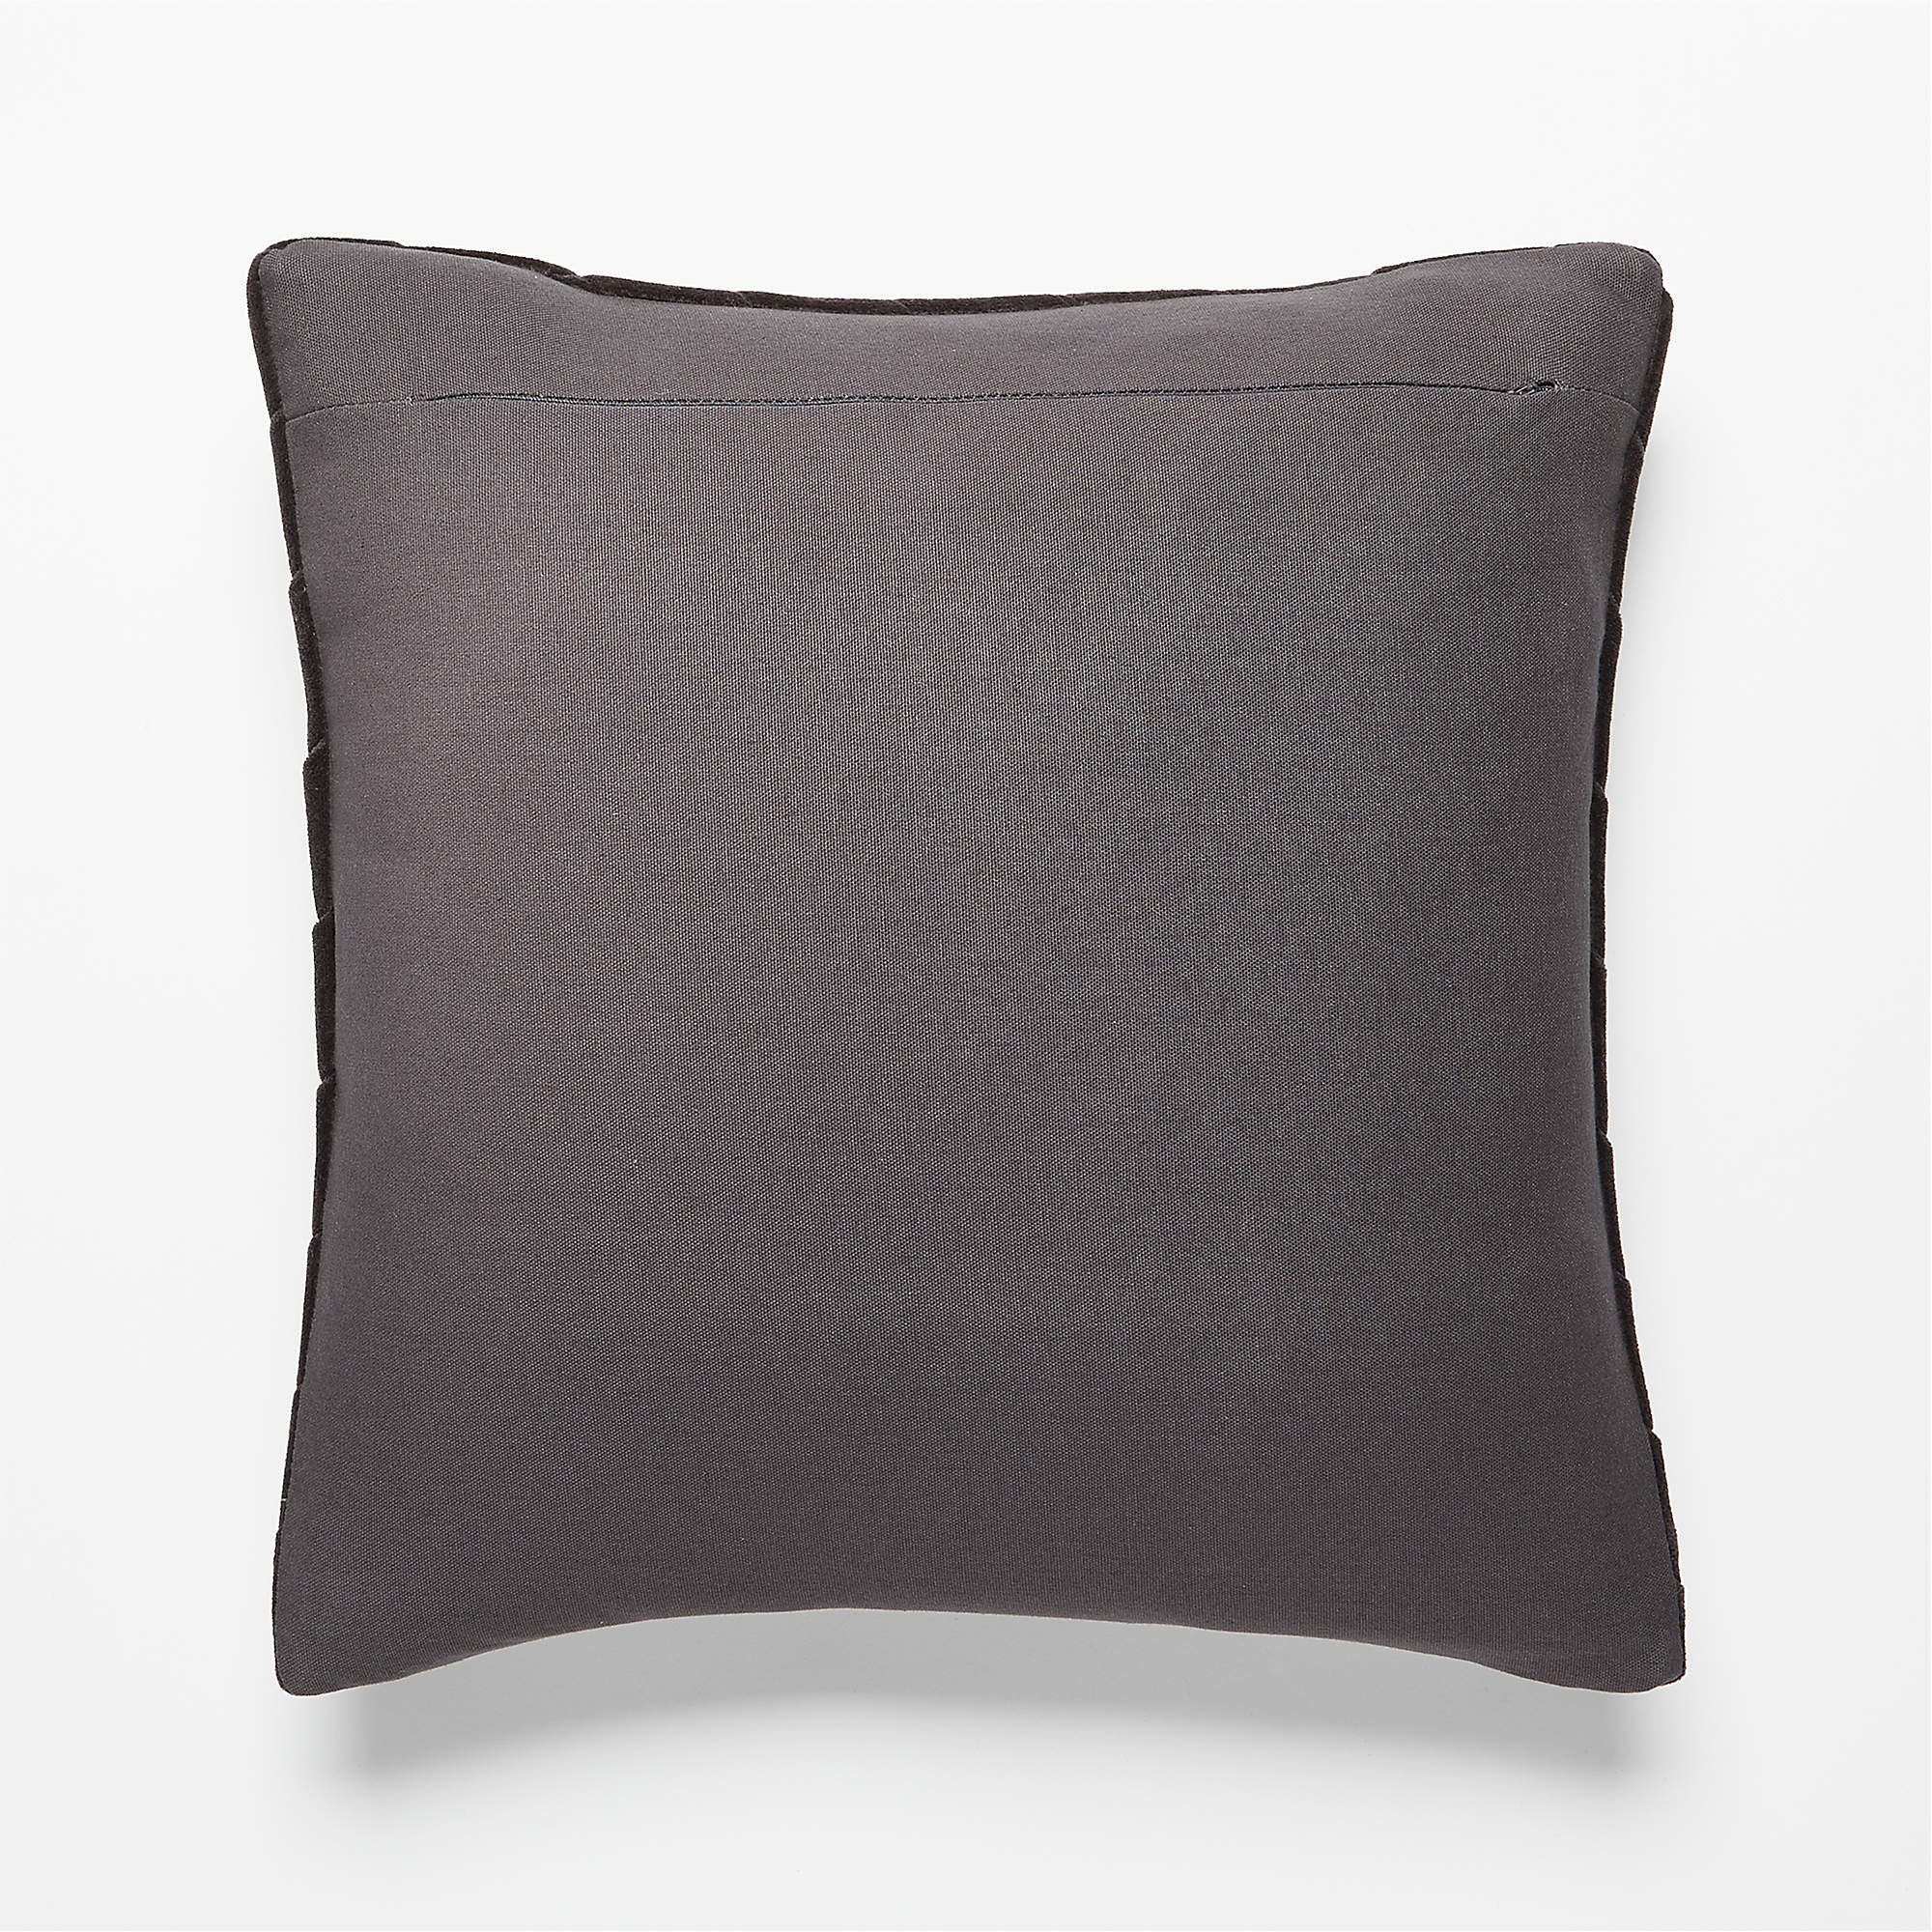 Leger Velvet Pillow Charcoal with Down-Alternative Insert, 18" x 18" - Image 2